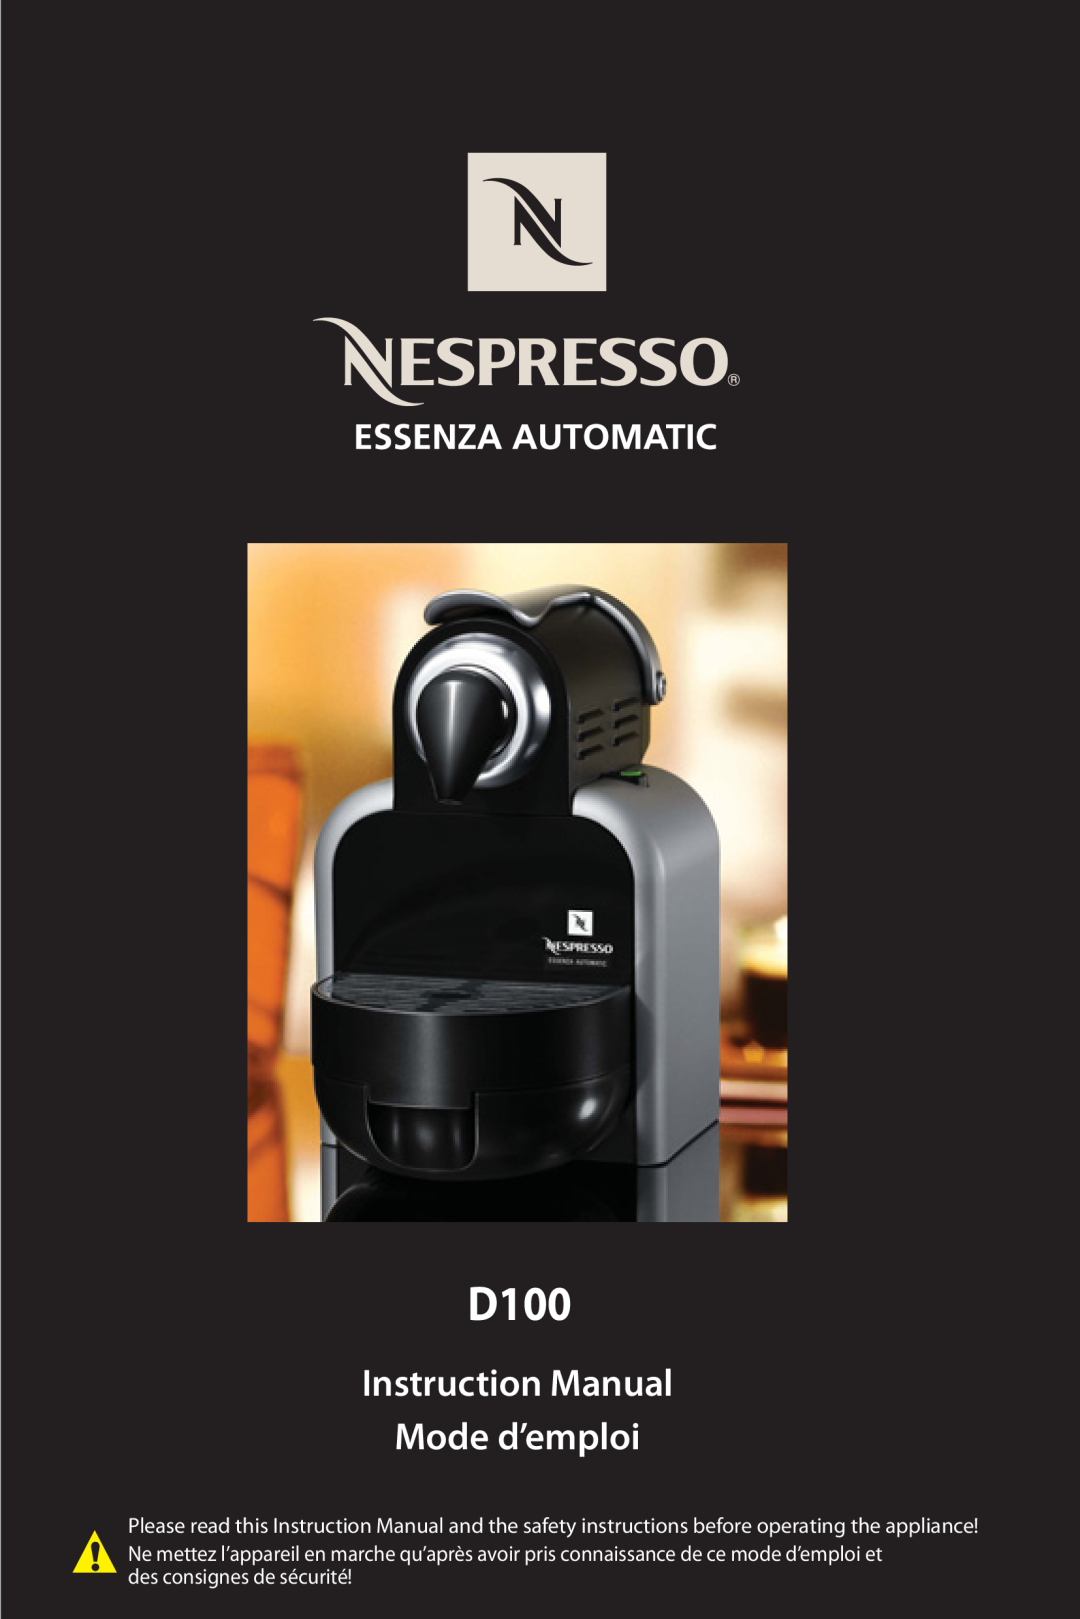 Nespresso D100, Essenza Automatic instruction manual Instruction Manual Mode d’emploi 